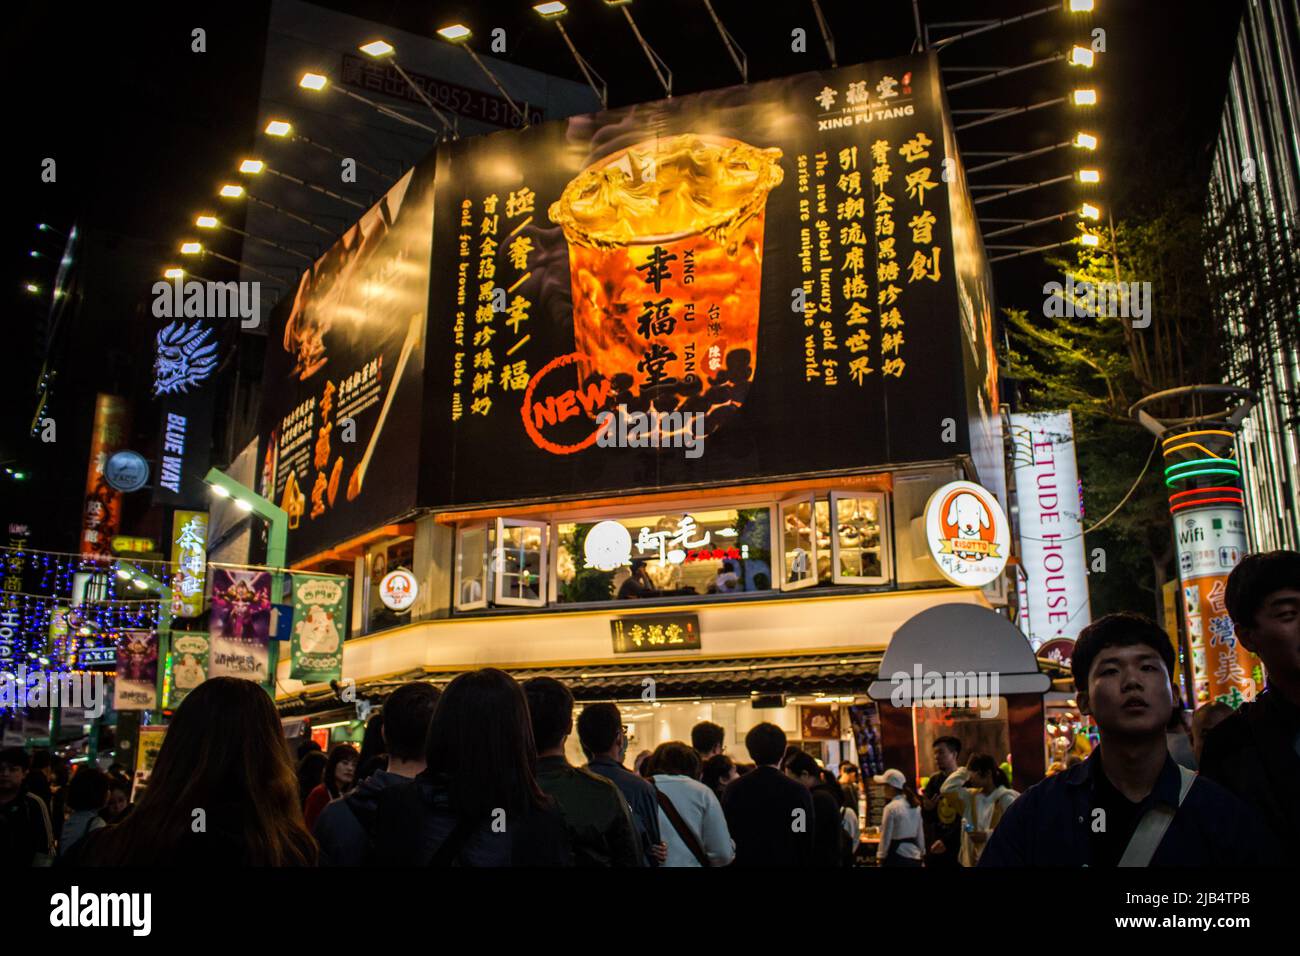 Taipei, Taiwan - Dec 18 2019 : Xing Fu Tang, popular tapioca chain shop in Taiwan, at night. In image, a lot of people waiting to buy a tapioca drink Stock Photo